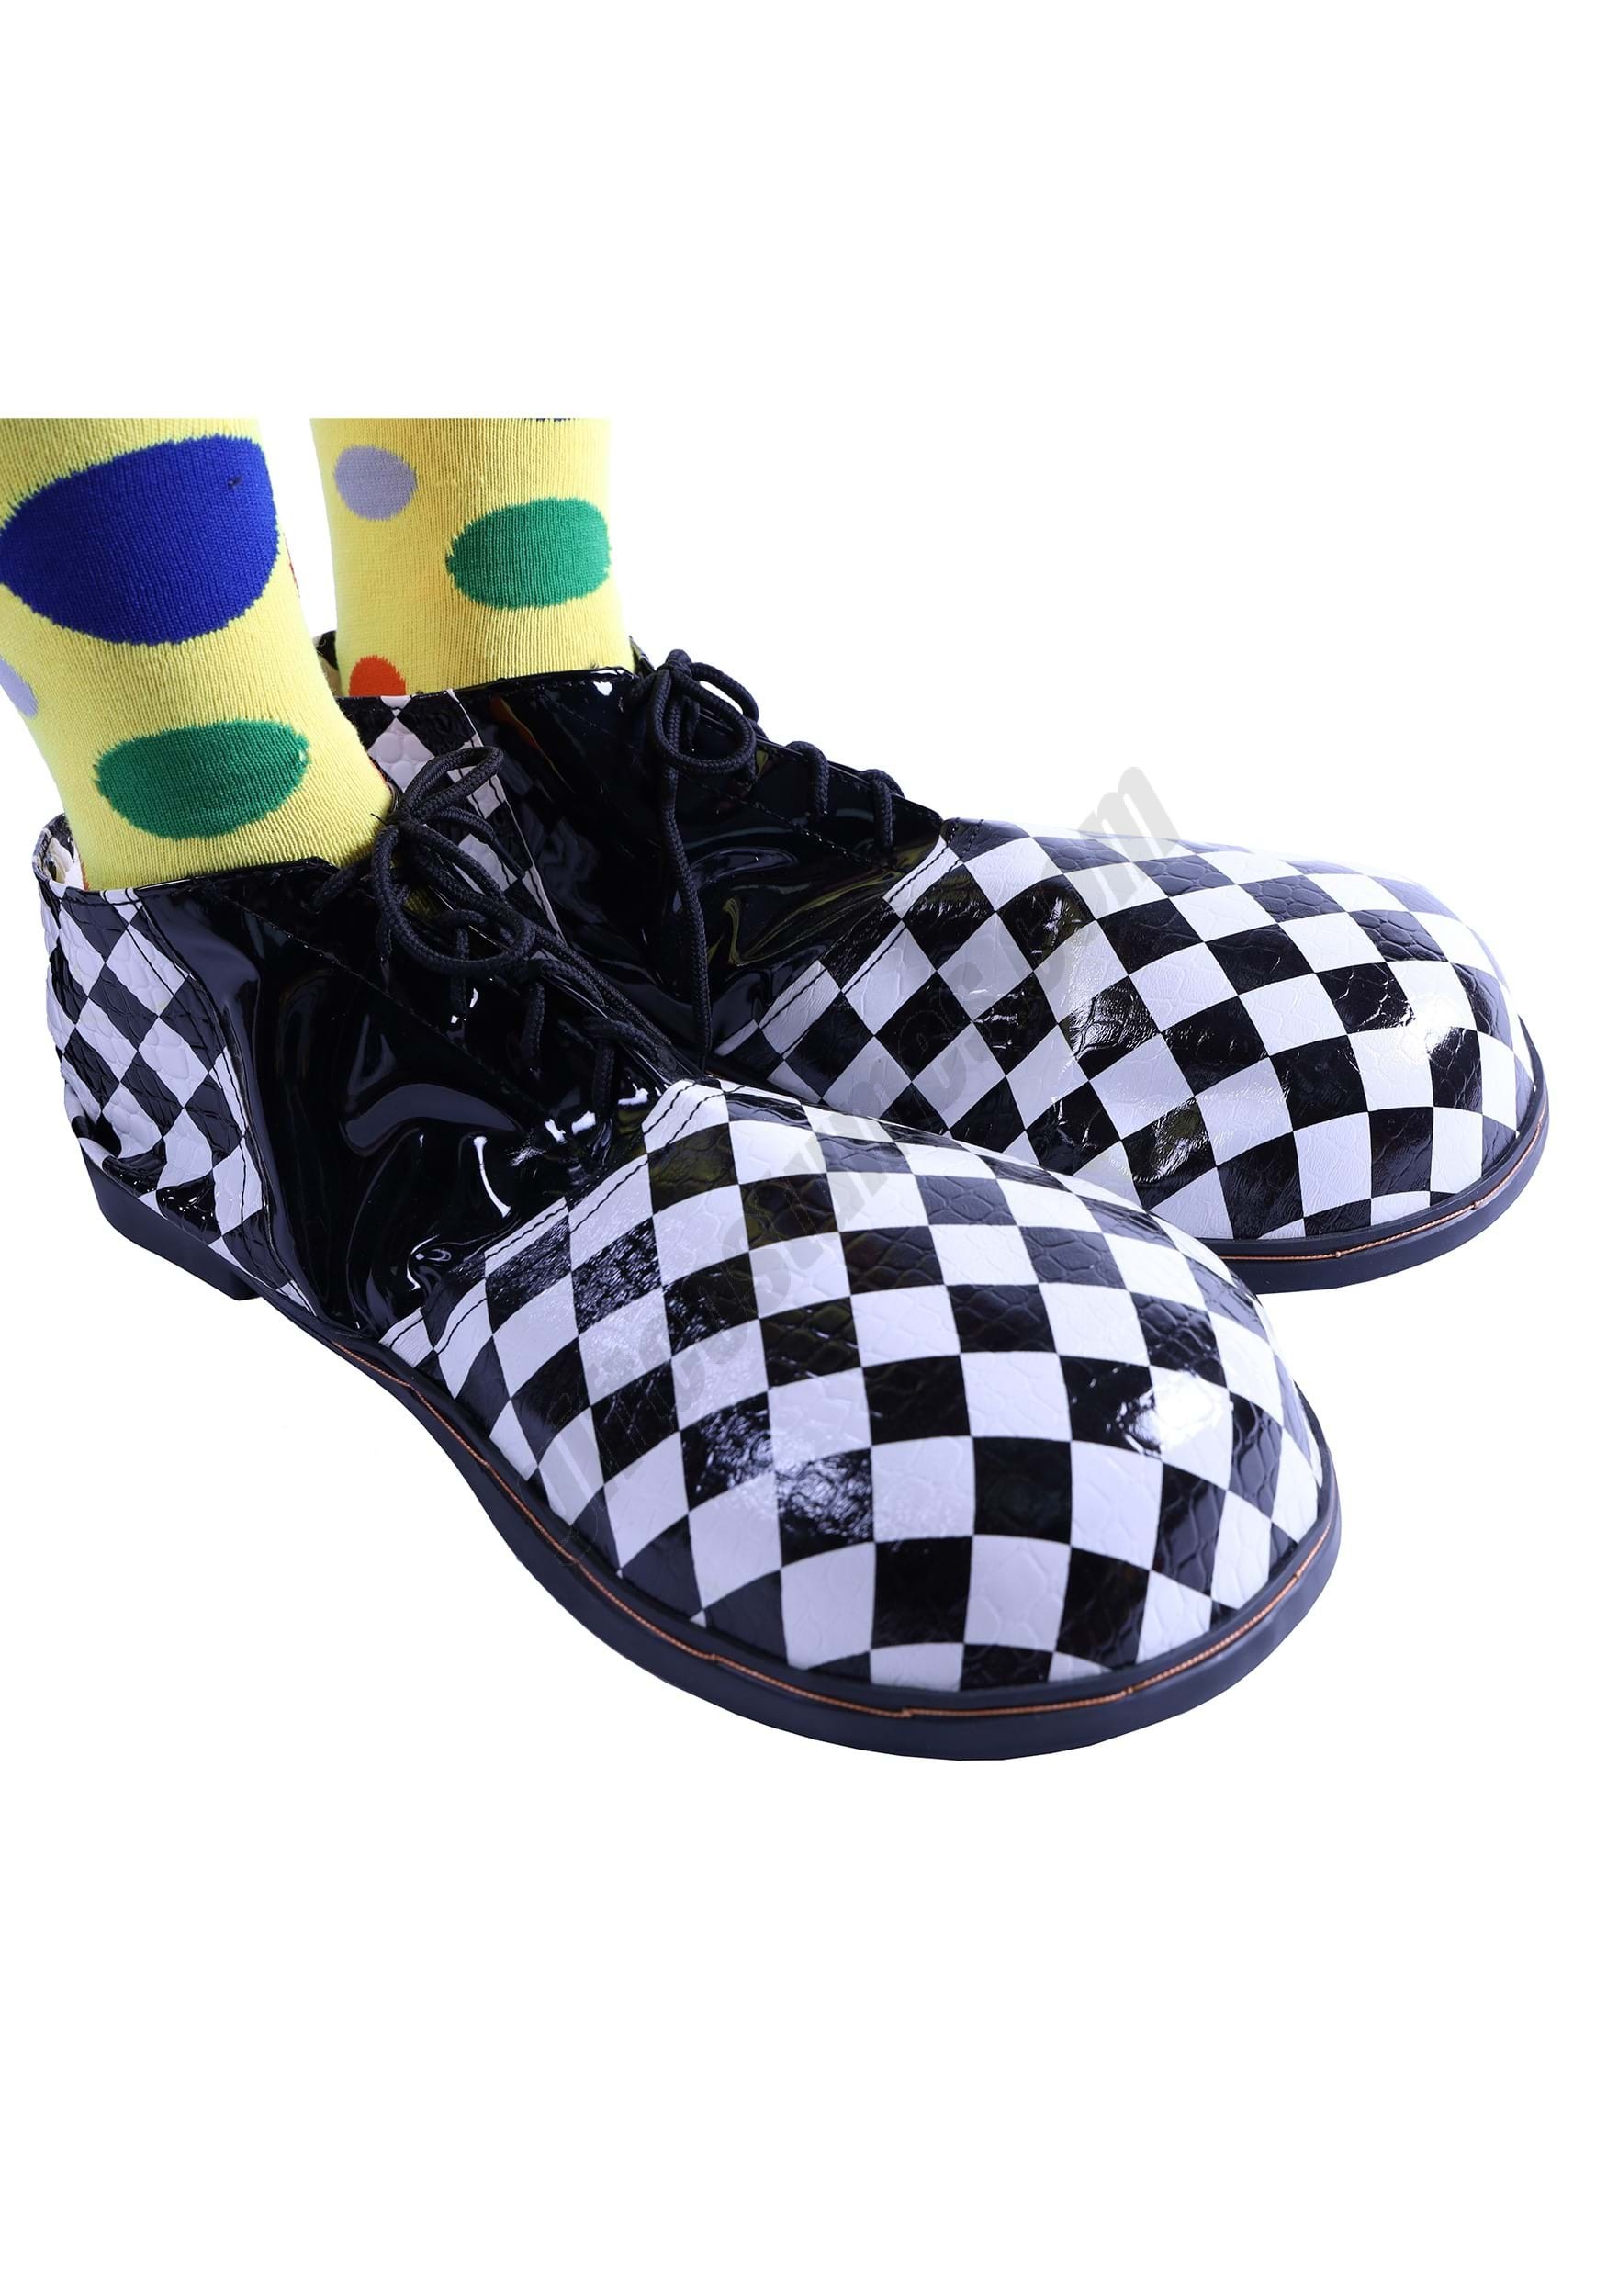 Checkered Jumbo Clown Shoe Promotions - Checkered Jumbo Clown Shoe Promotions